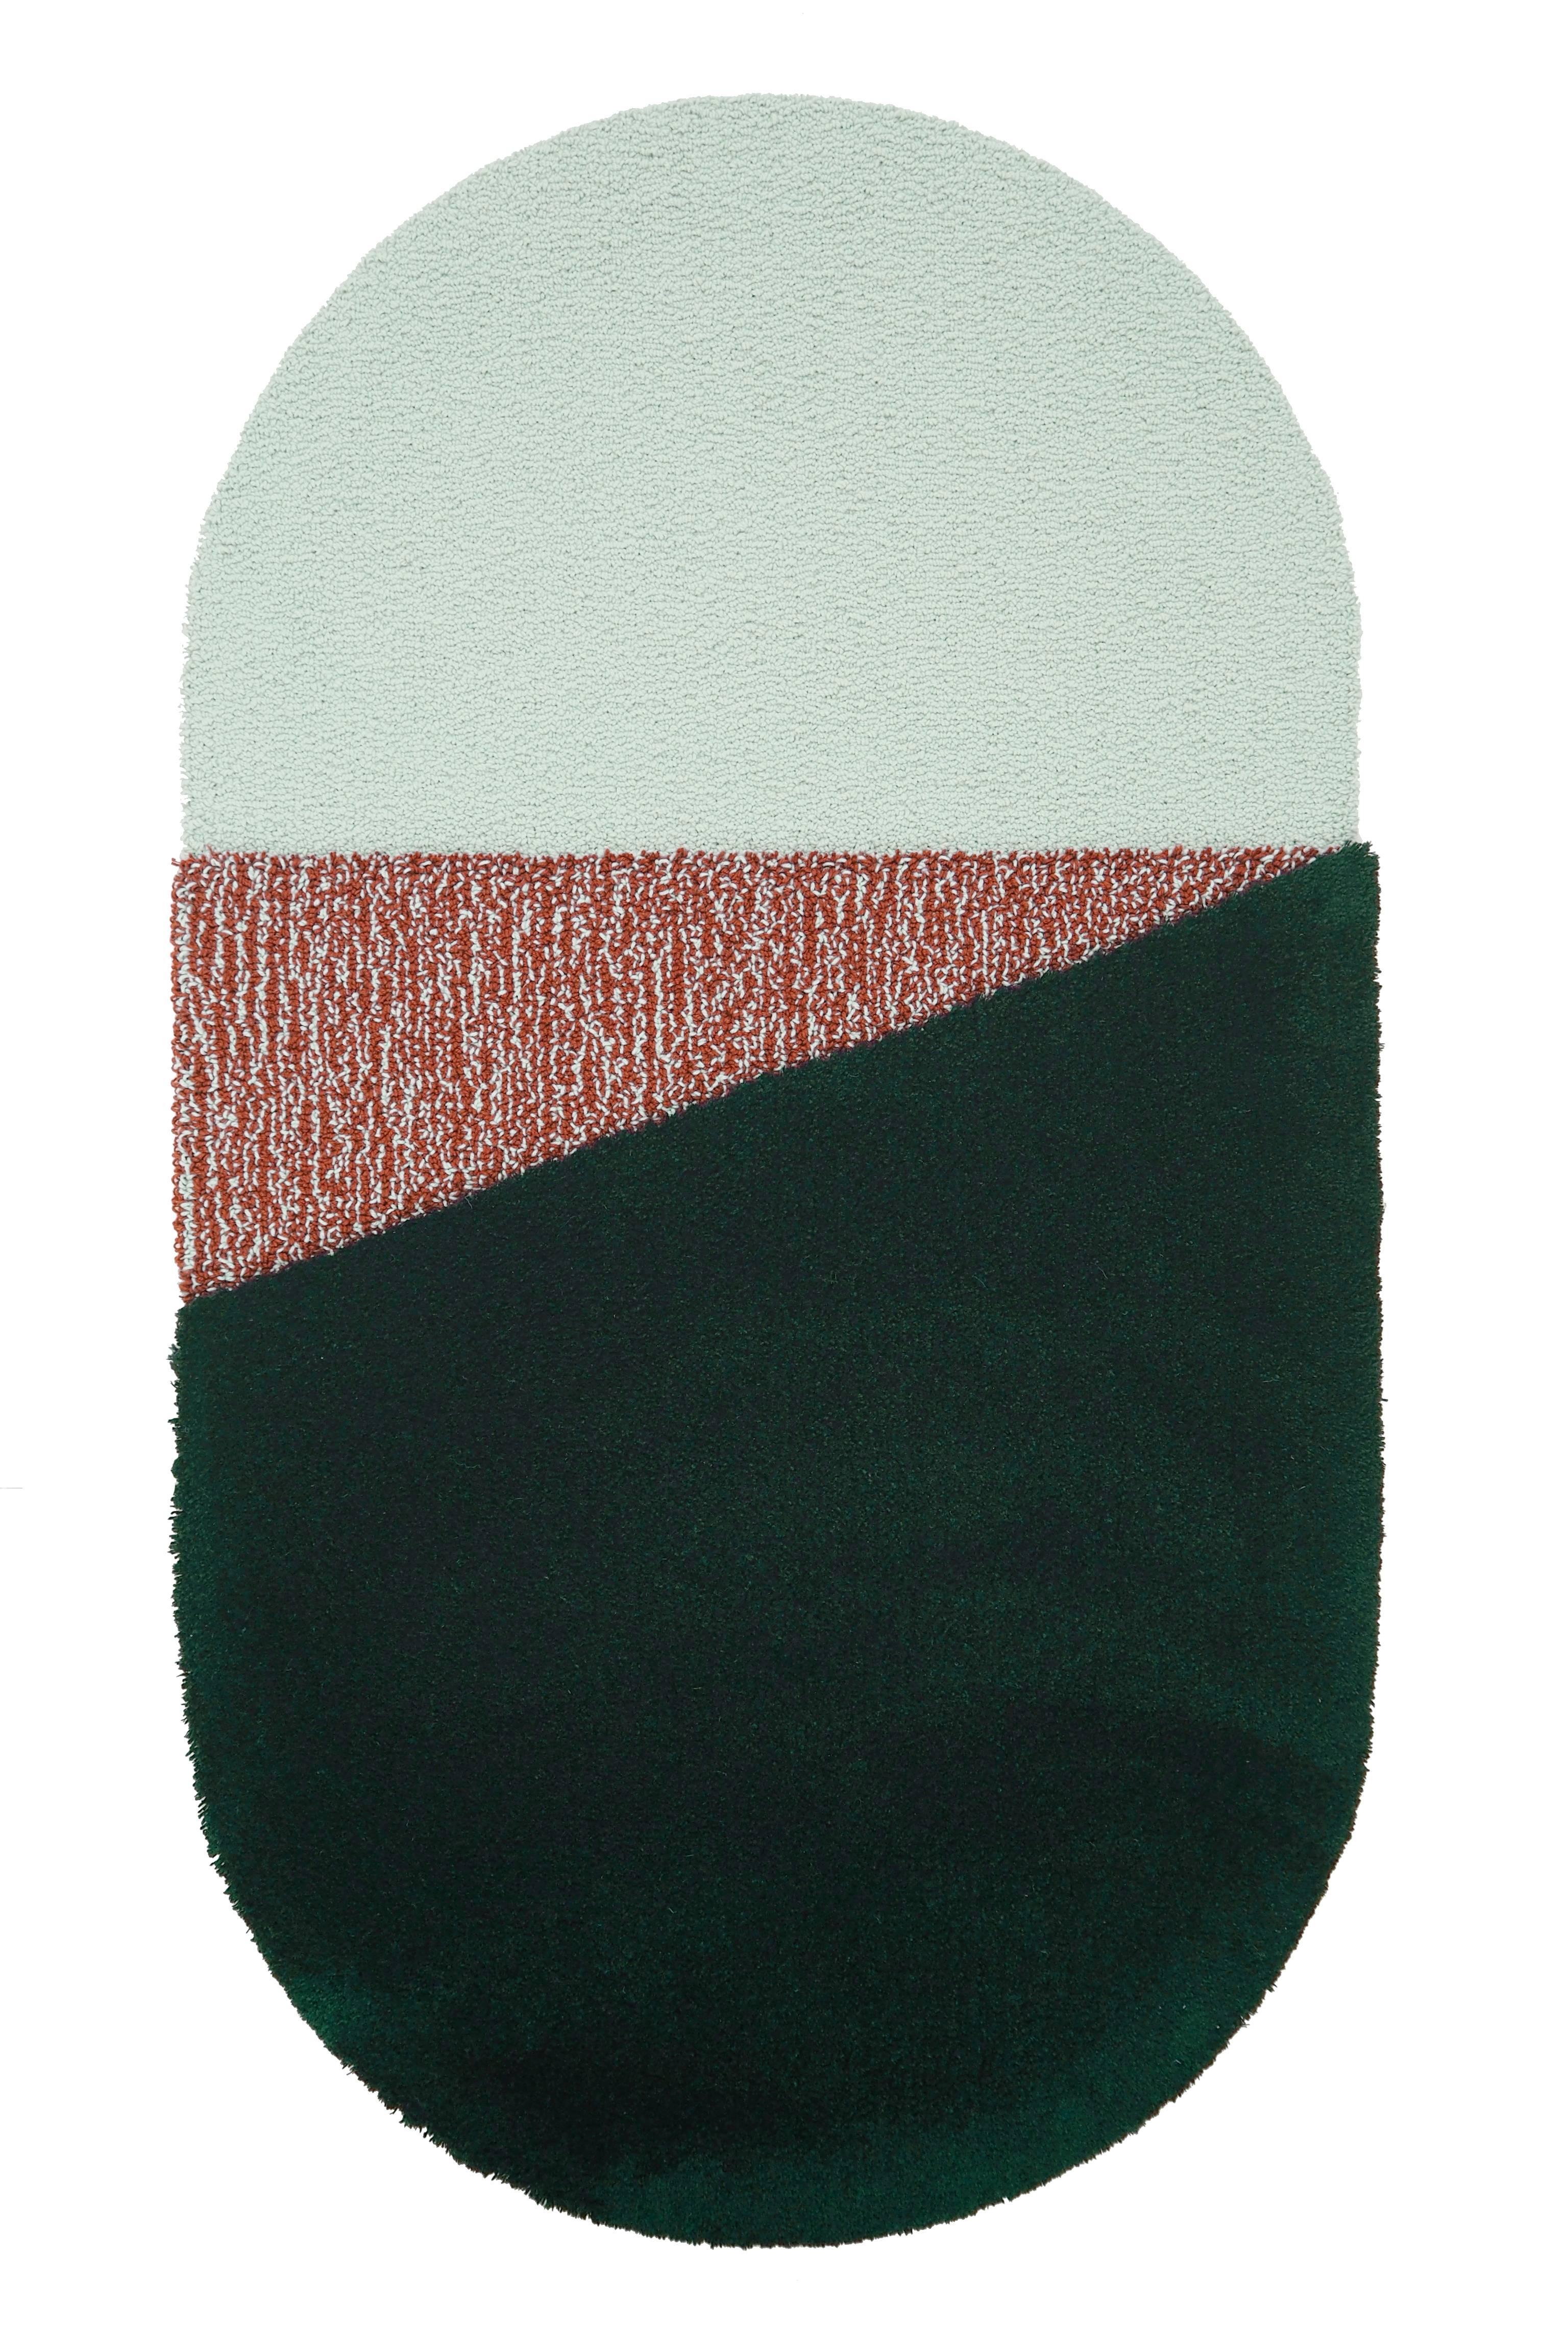 Contemporary Medium Green Oci Rug Triptych by Seraina Lareida For Sale